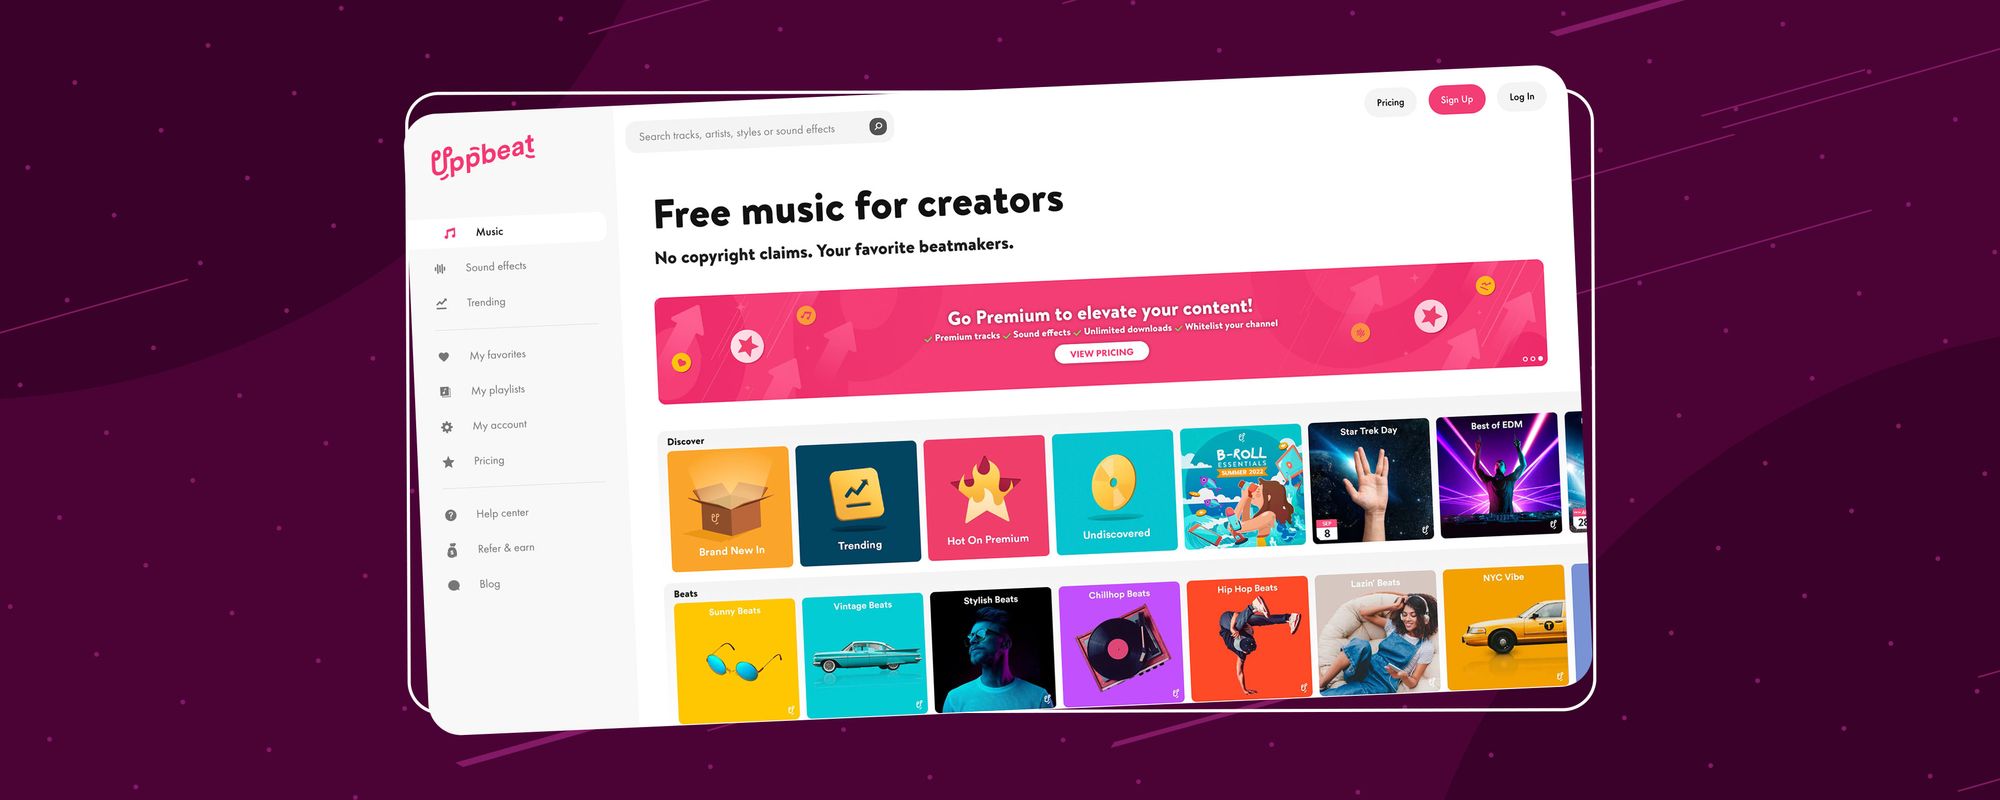 Uppbeat's free music website for creators.